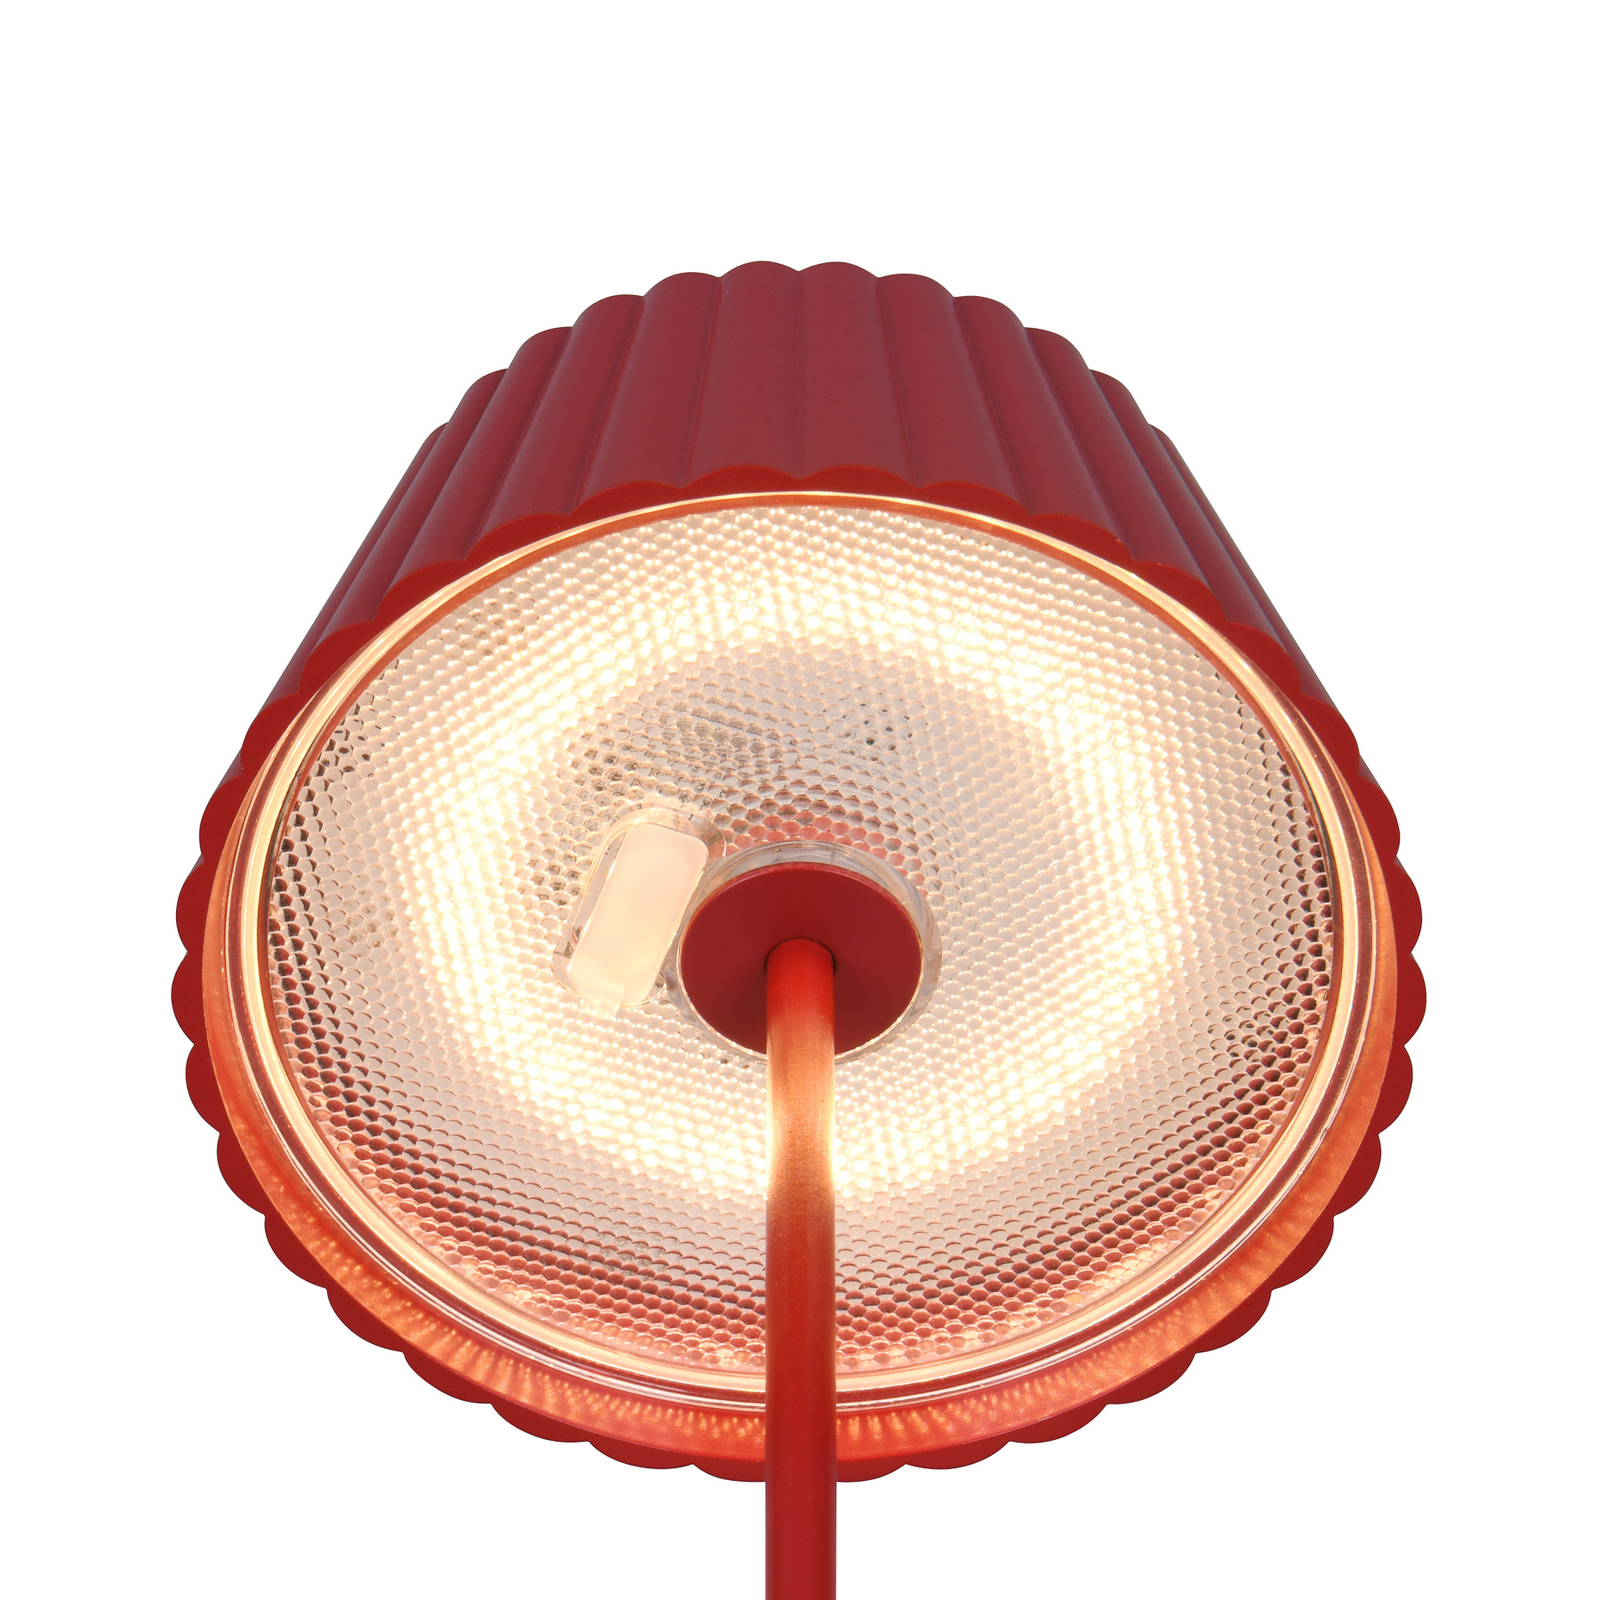 LED-Akku-Stehlampe Suarez, rot, Höhe 123 cm, Metall